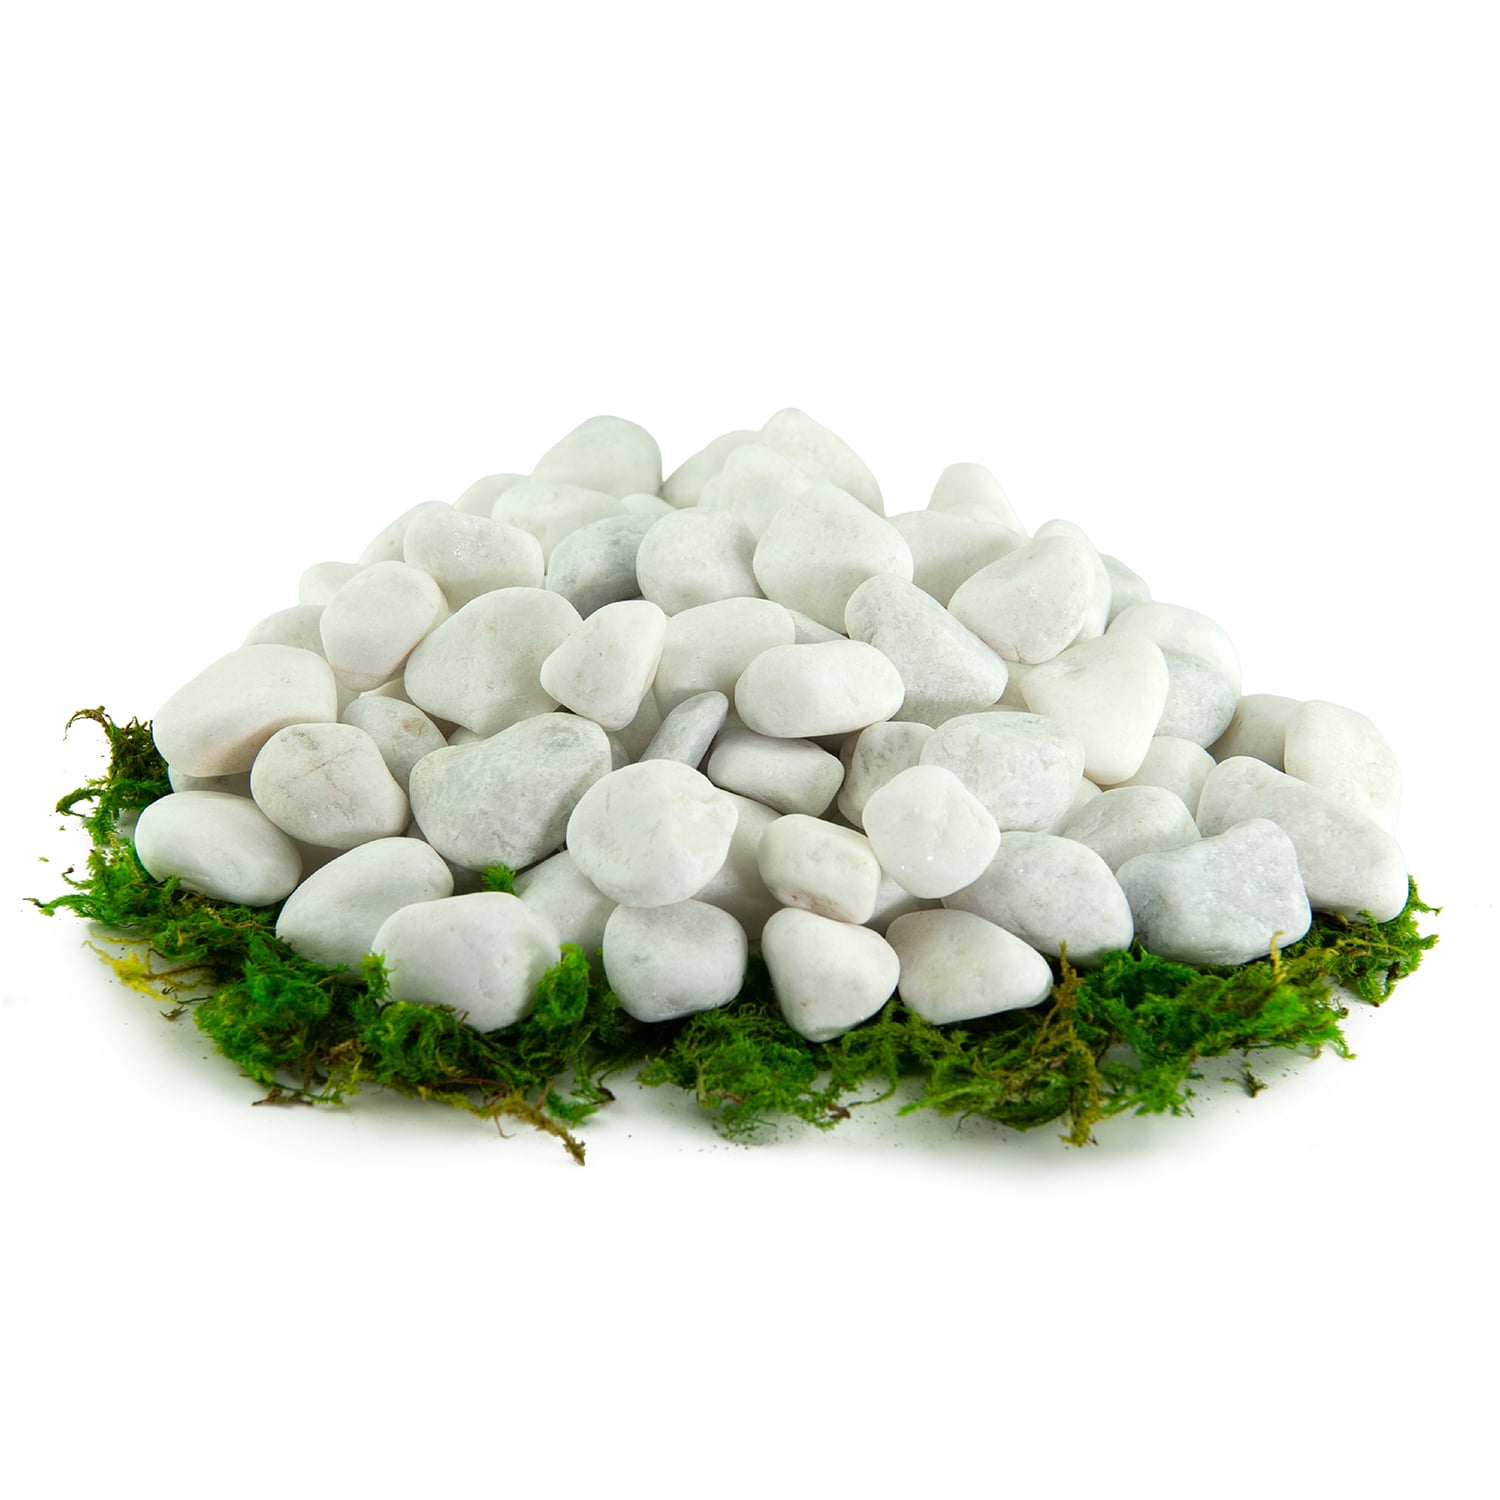 Decorative White Garden Pebbles Stone Aggregates Slate Rocks Wedding Home Vase 